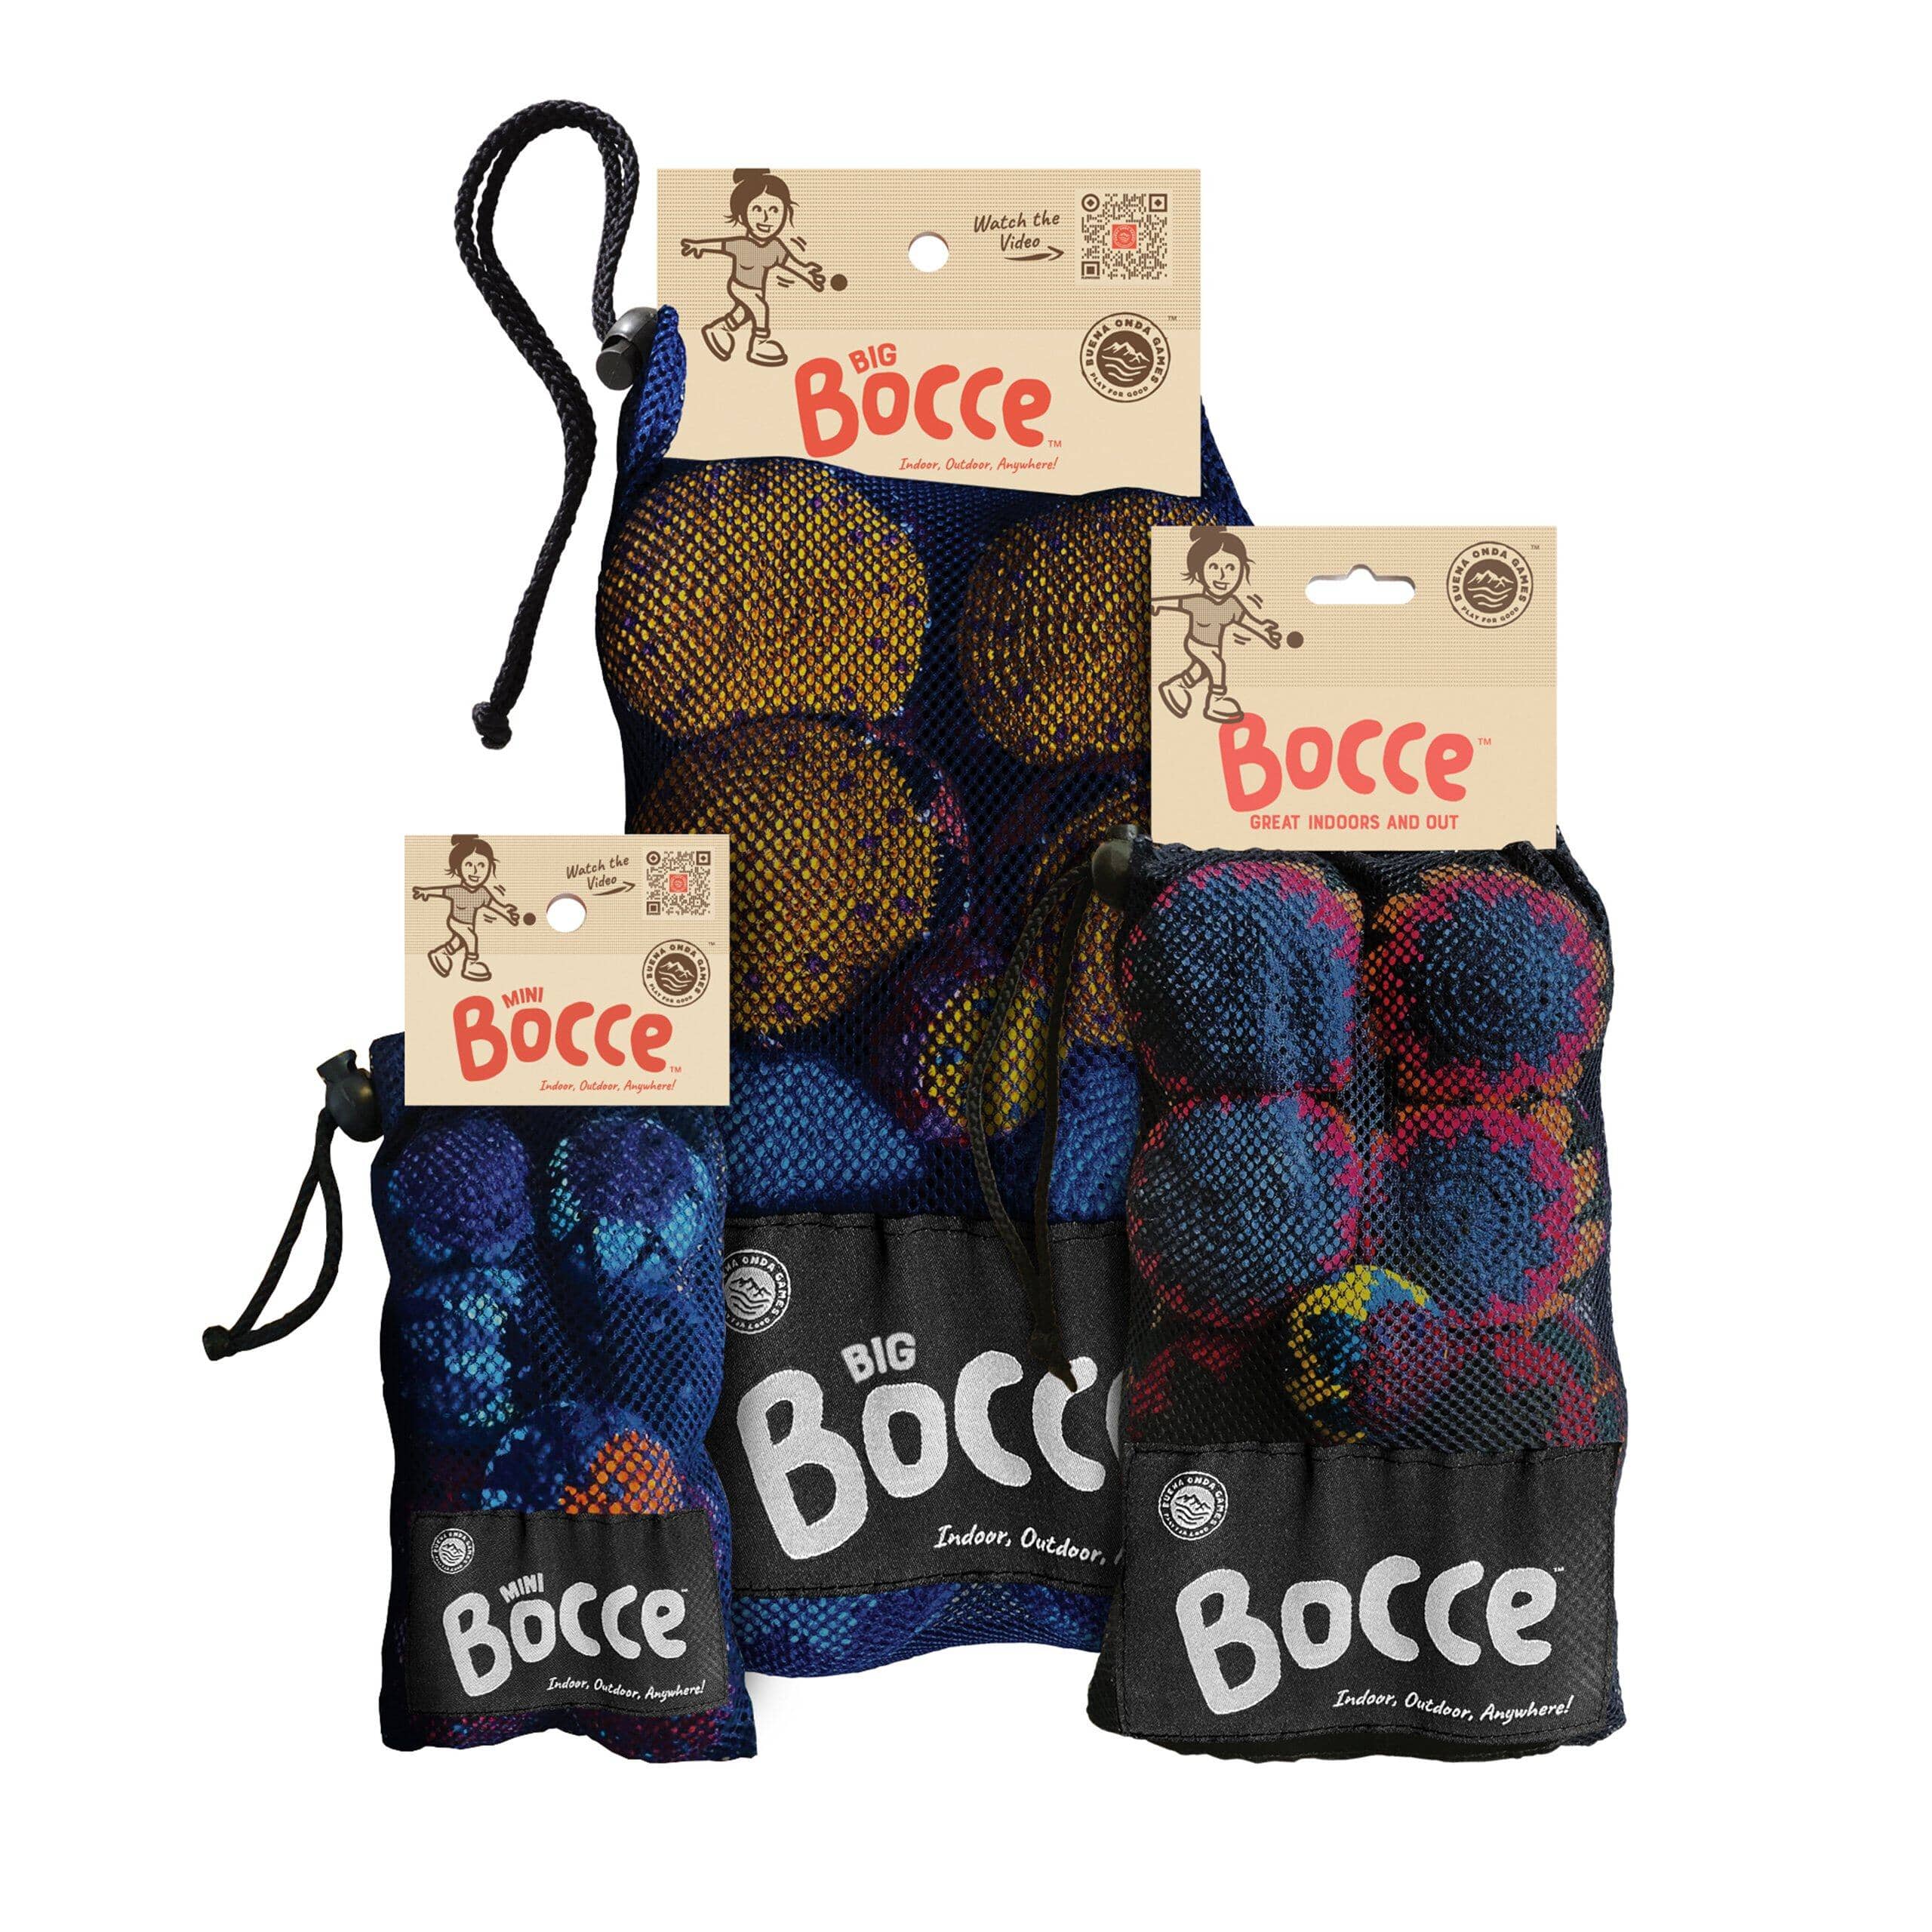 Big Bocce - 6 Pack Wholesale Buena Onda Games | Handmade, Fair Trade, Crochet, Knit, Cloth Toys, Indoor, Outdoor Games, Party, Backyard Games, Sports, Beach Lake Toys